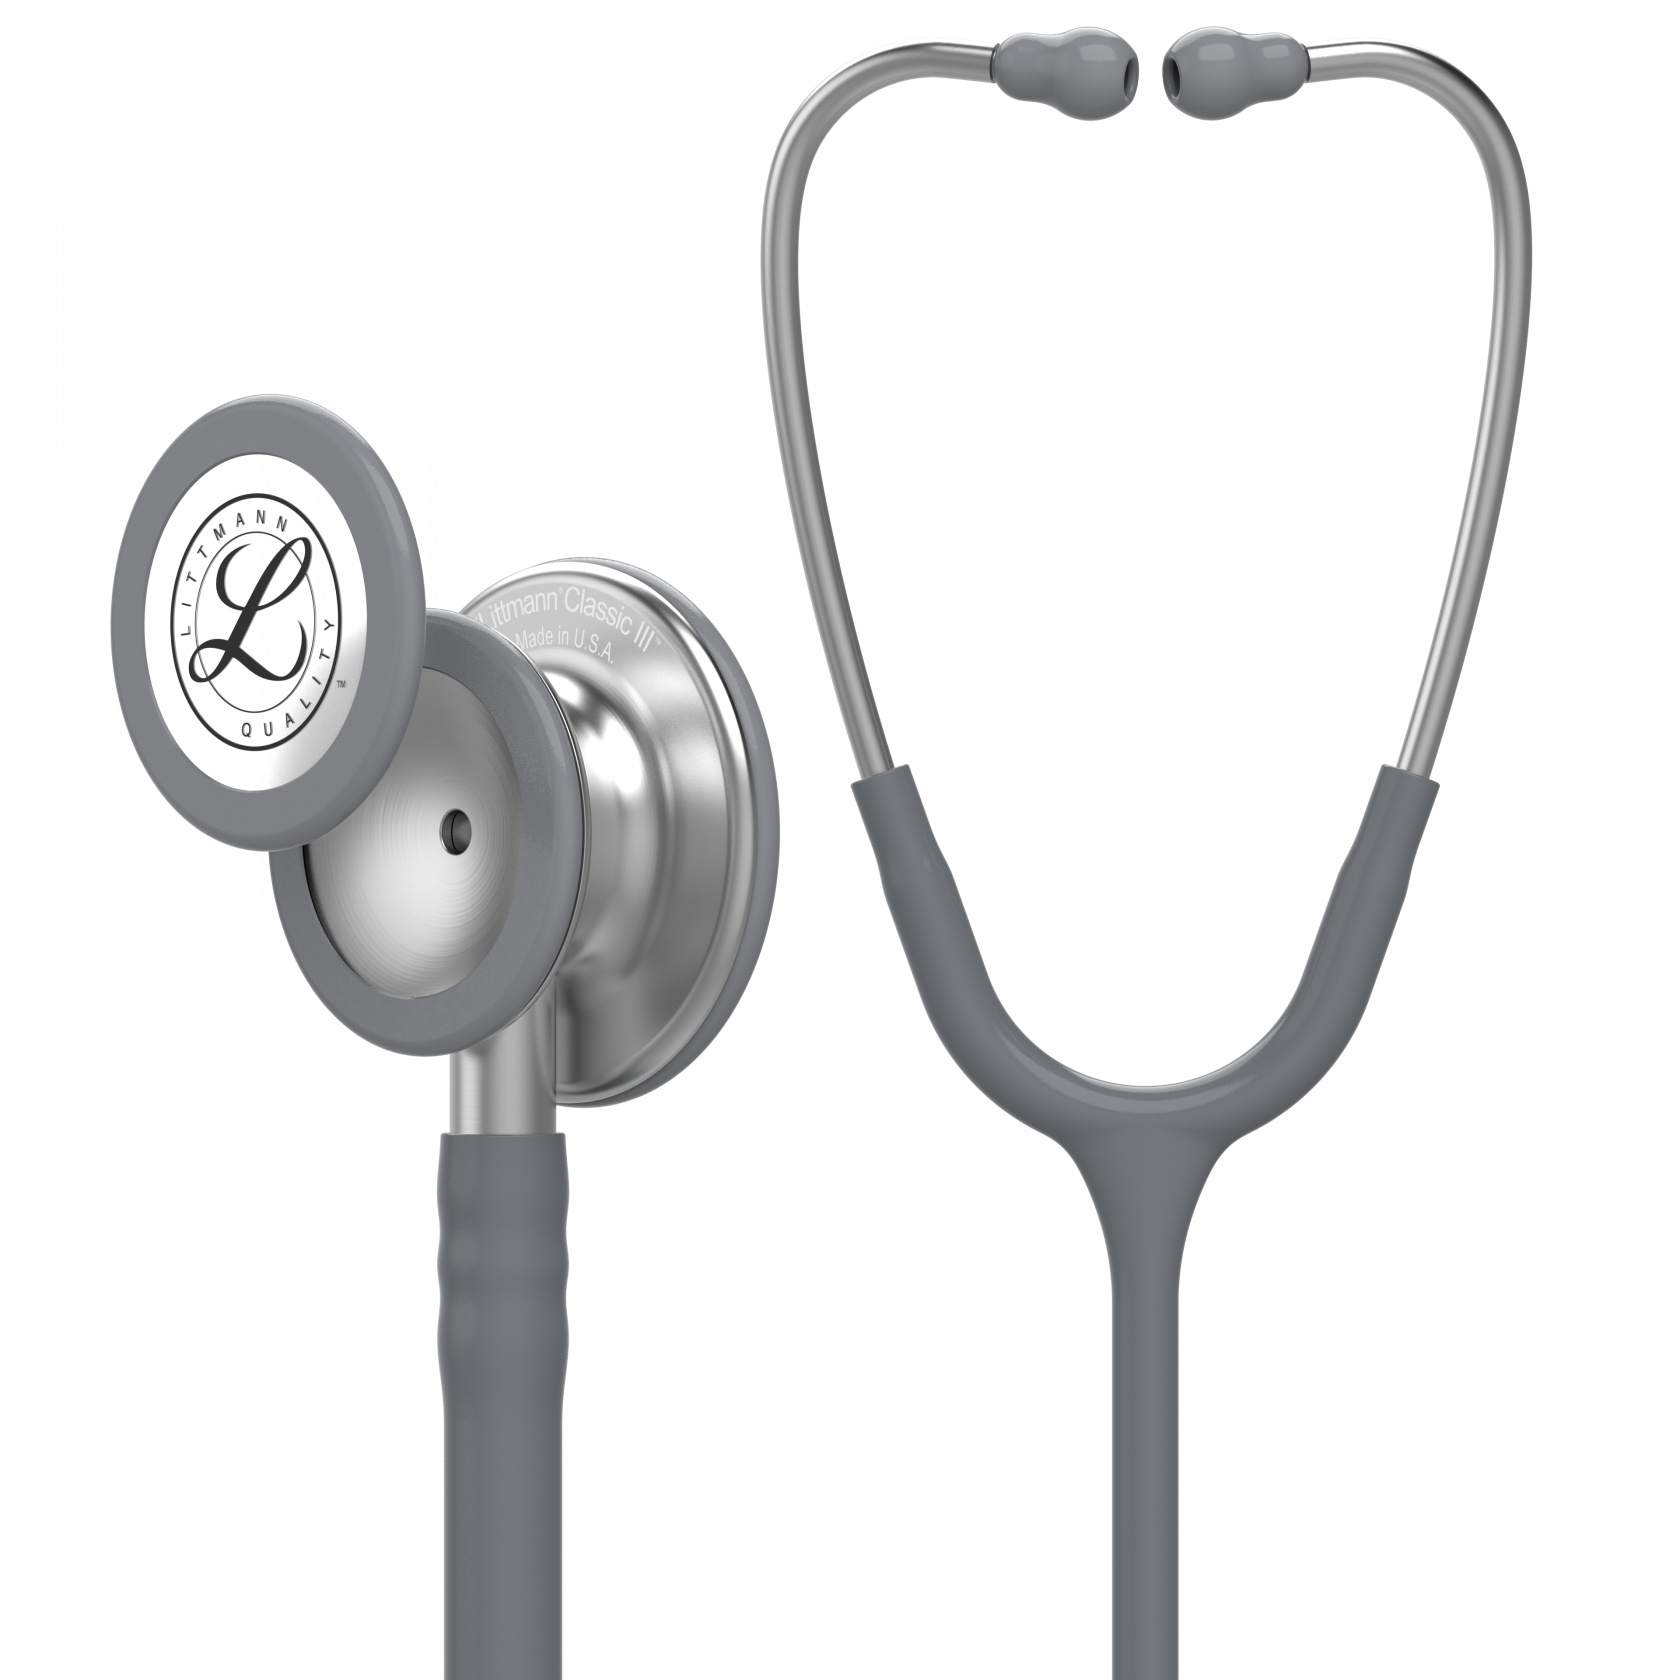 3M Stethoscope Littmann Classic III Gray image 1